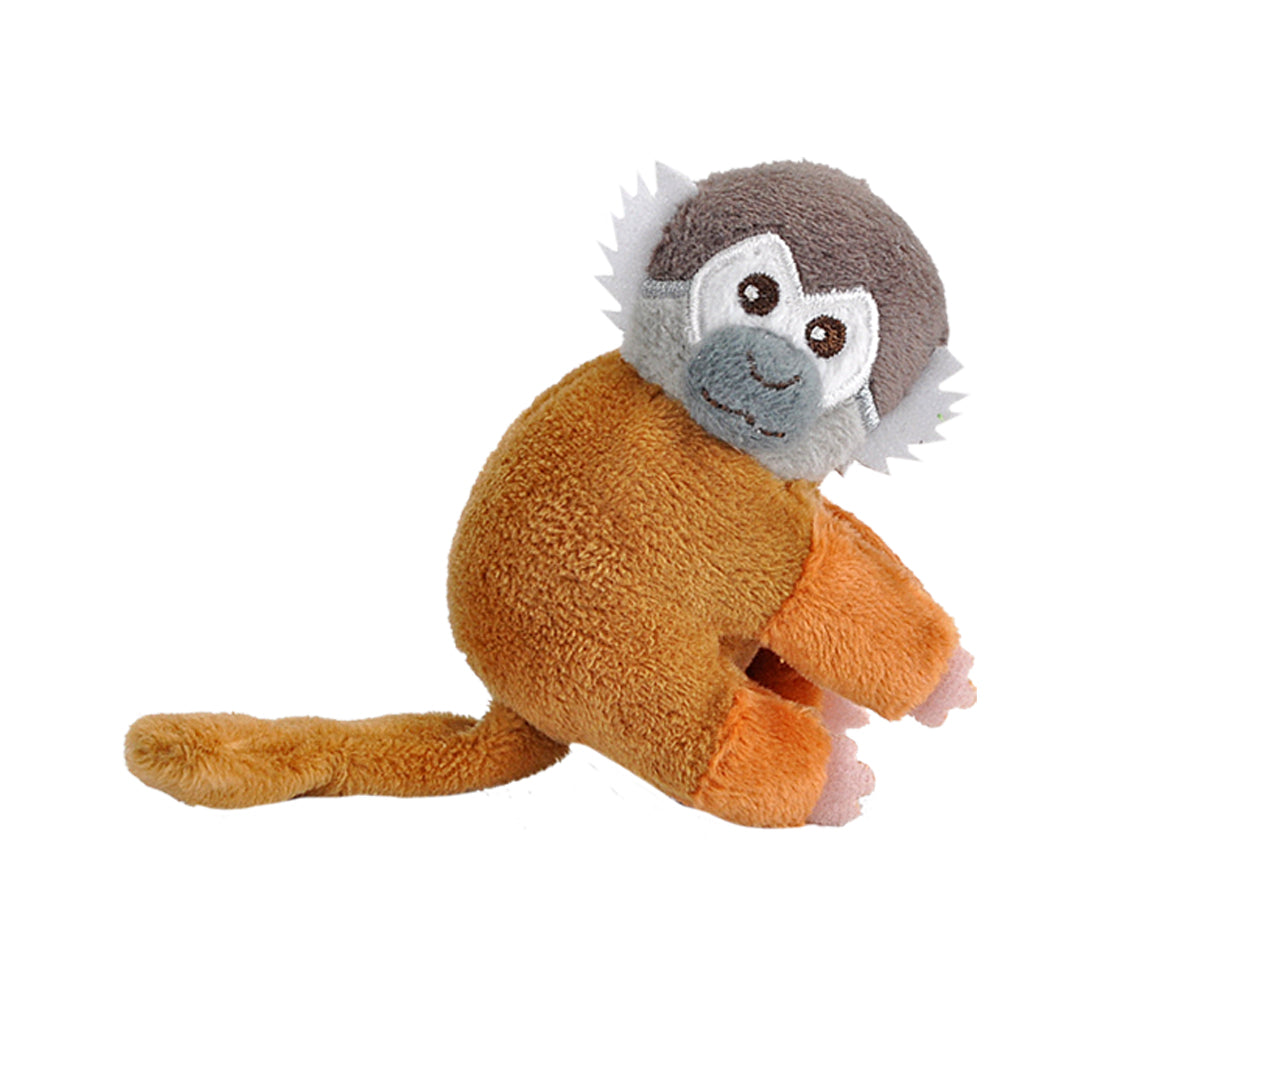 Clipkins Squirrel Monkey Stuffed Animal - 3"